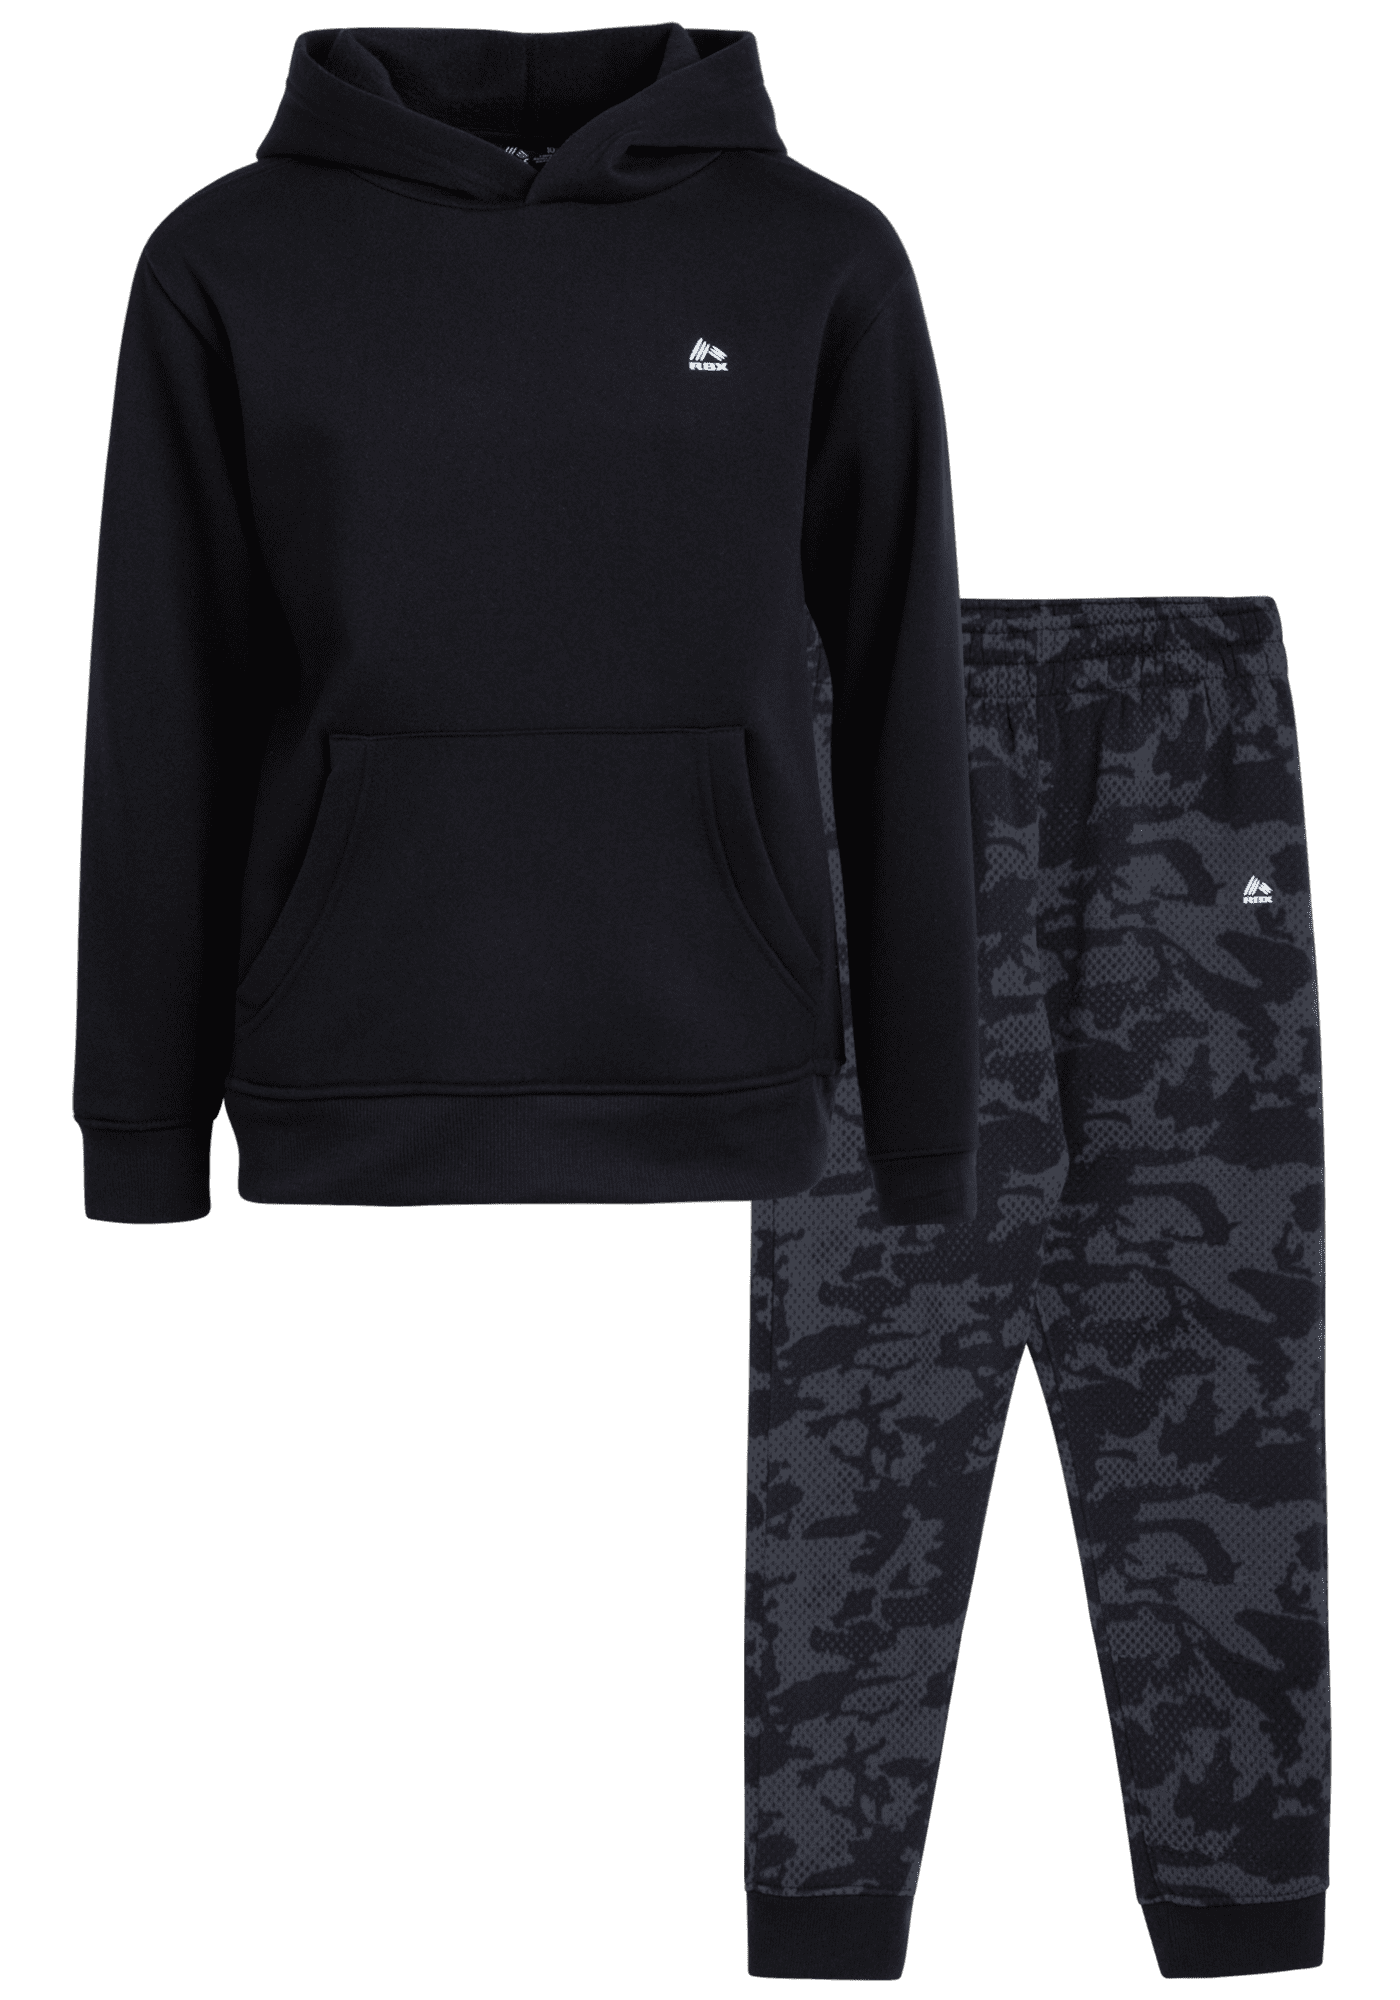 RBX Boy's Jogger Set - 2 Piece Fleece Sweatsuit Kids Clothing Set (Size ...